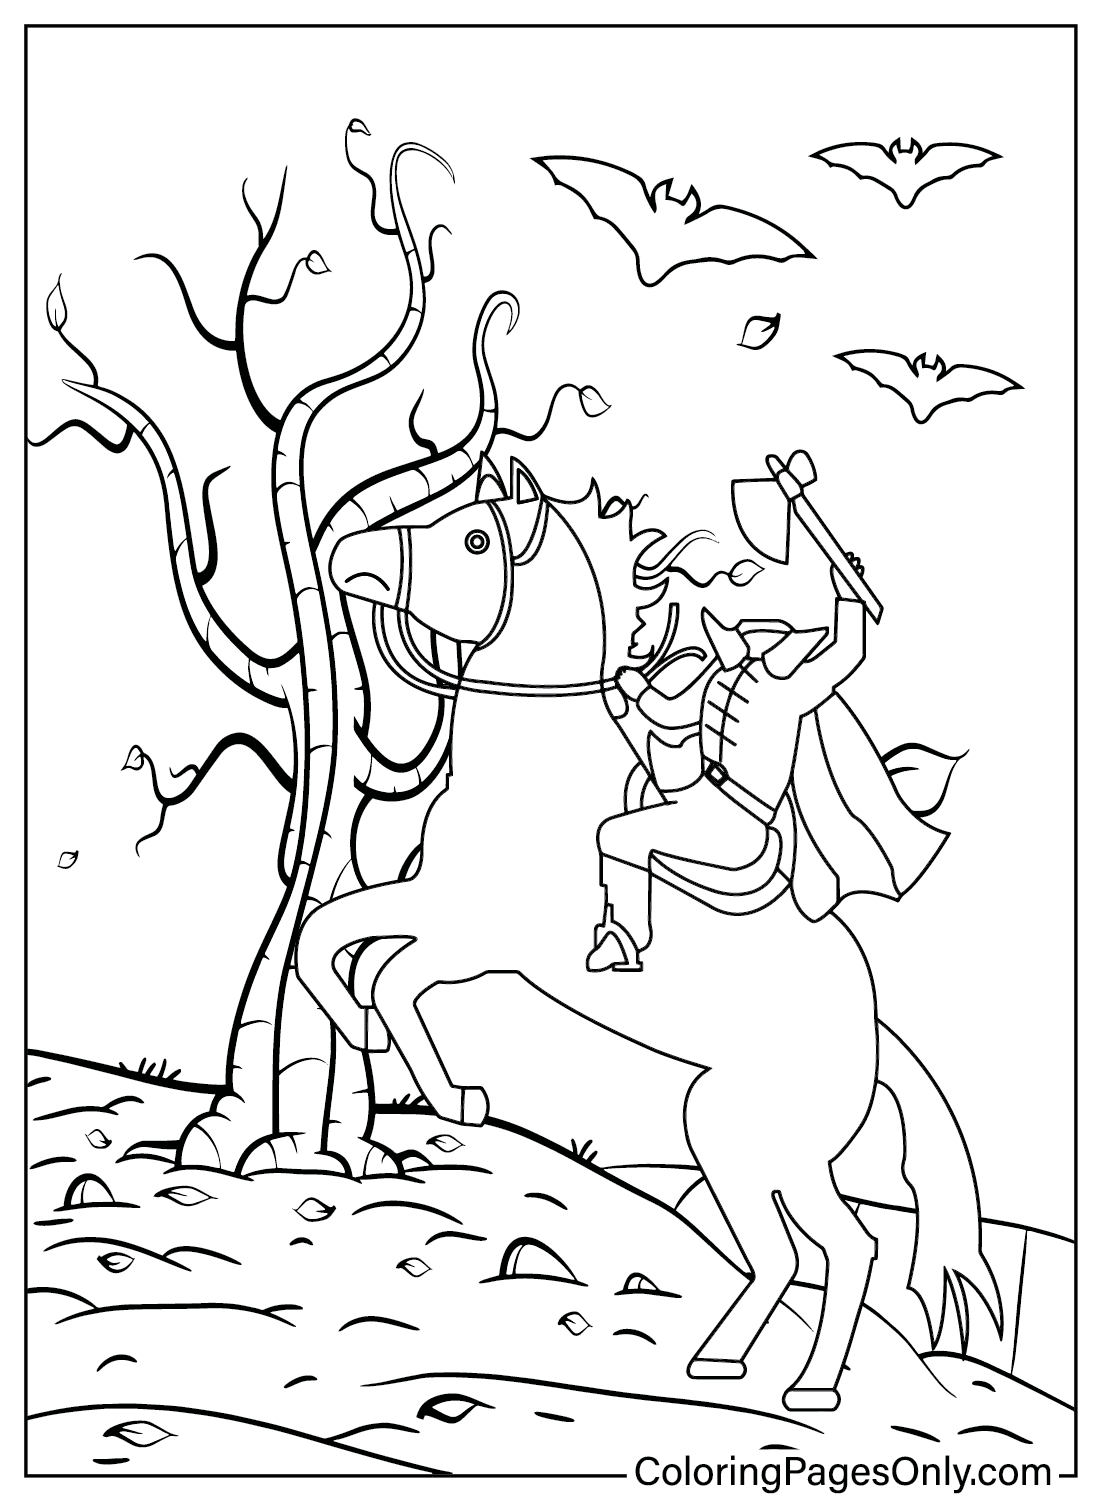 Print Headless Horseman Coloring Page from Headless Horseman